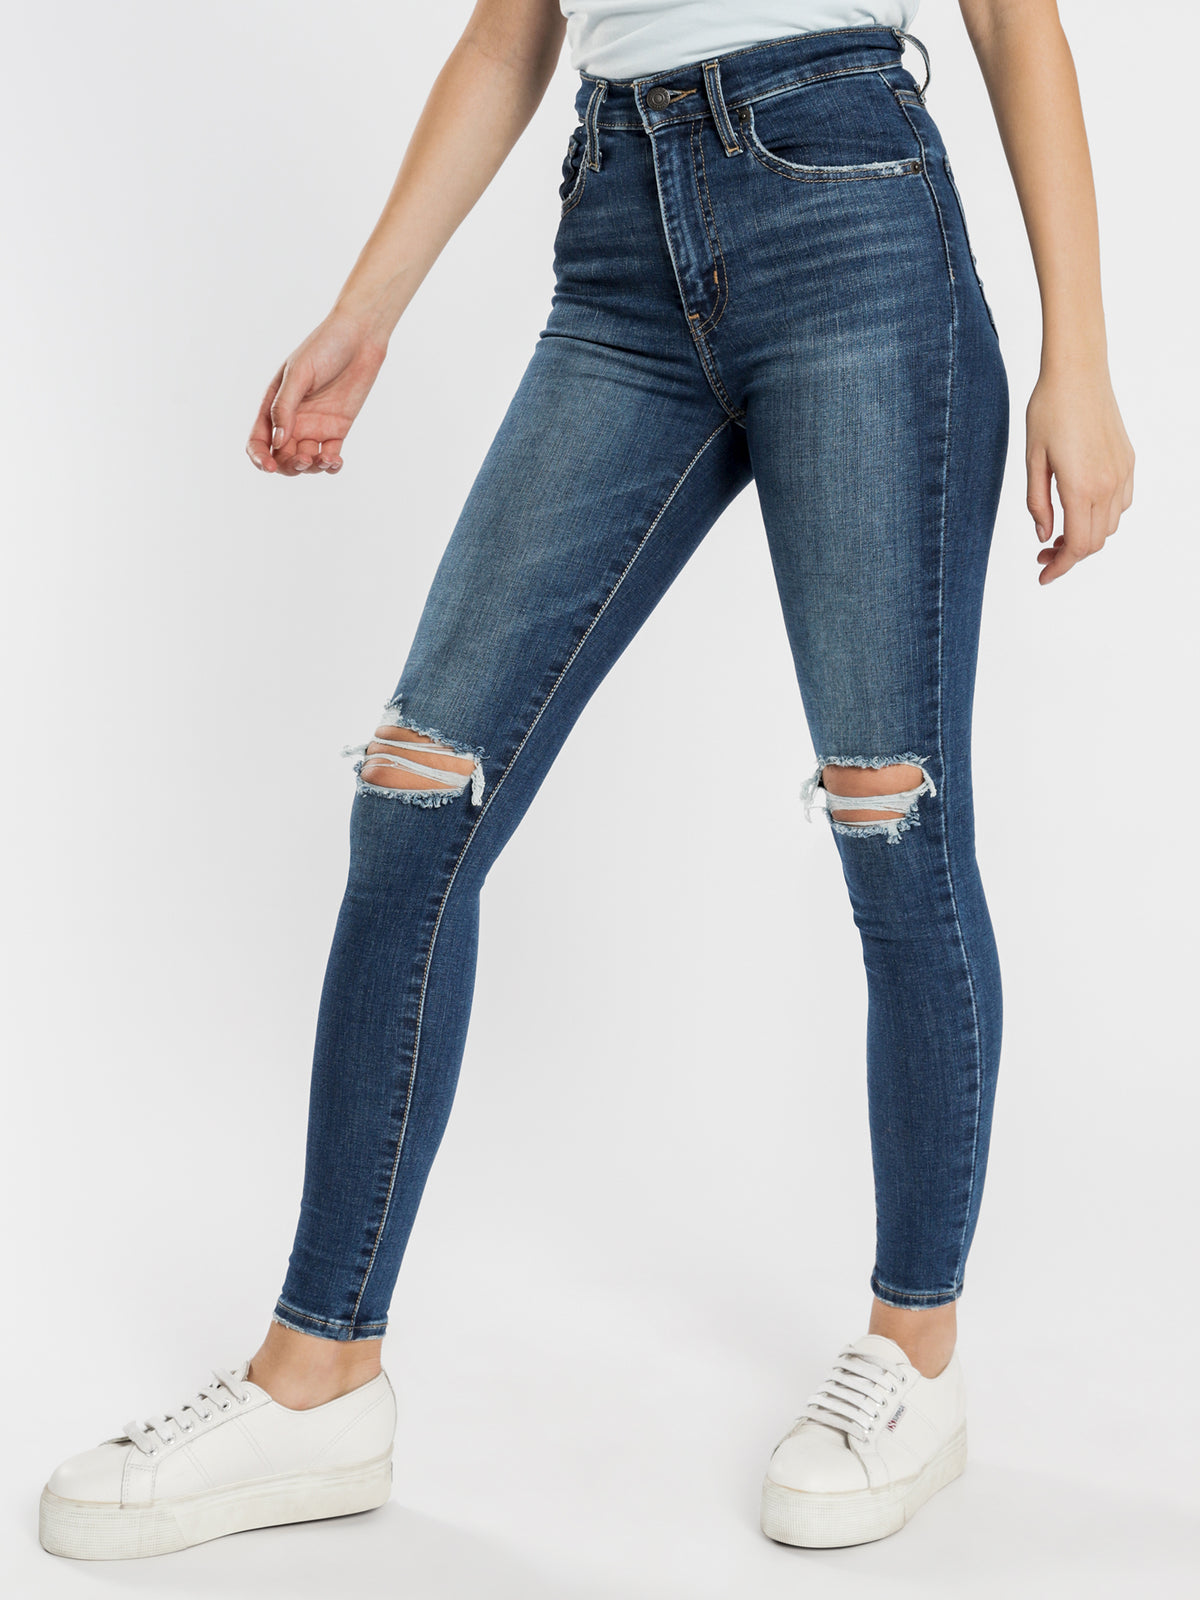 Mile High Super Skinny Jeans in Shady Business Blue Denim - Glue Store